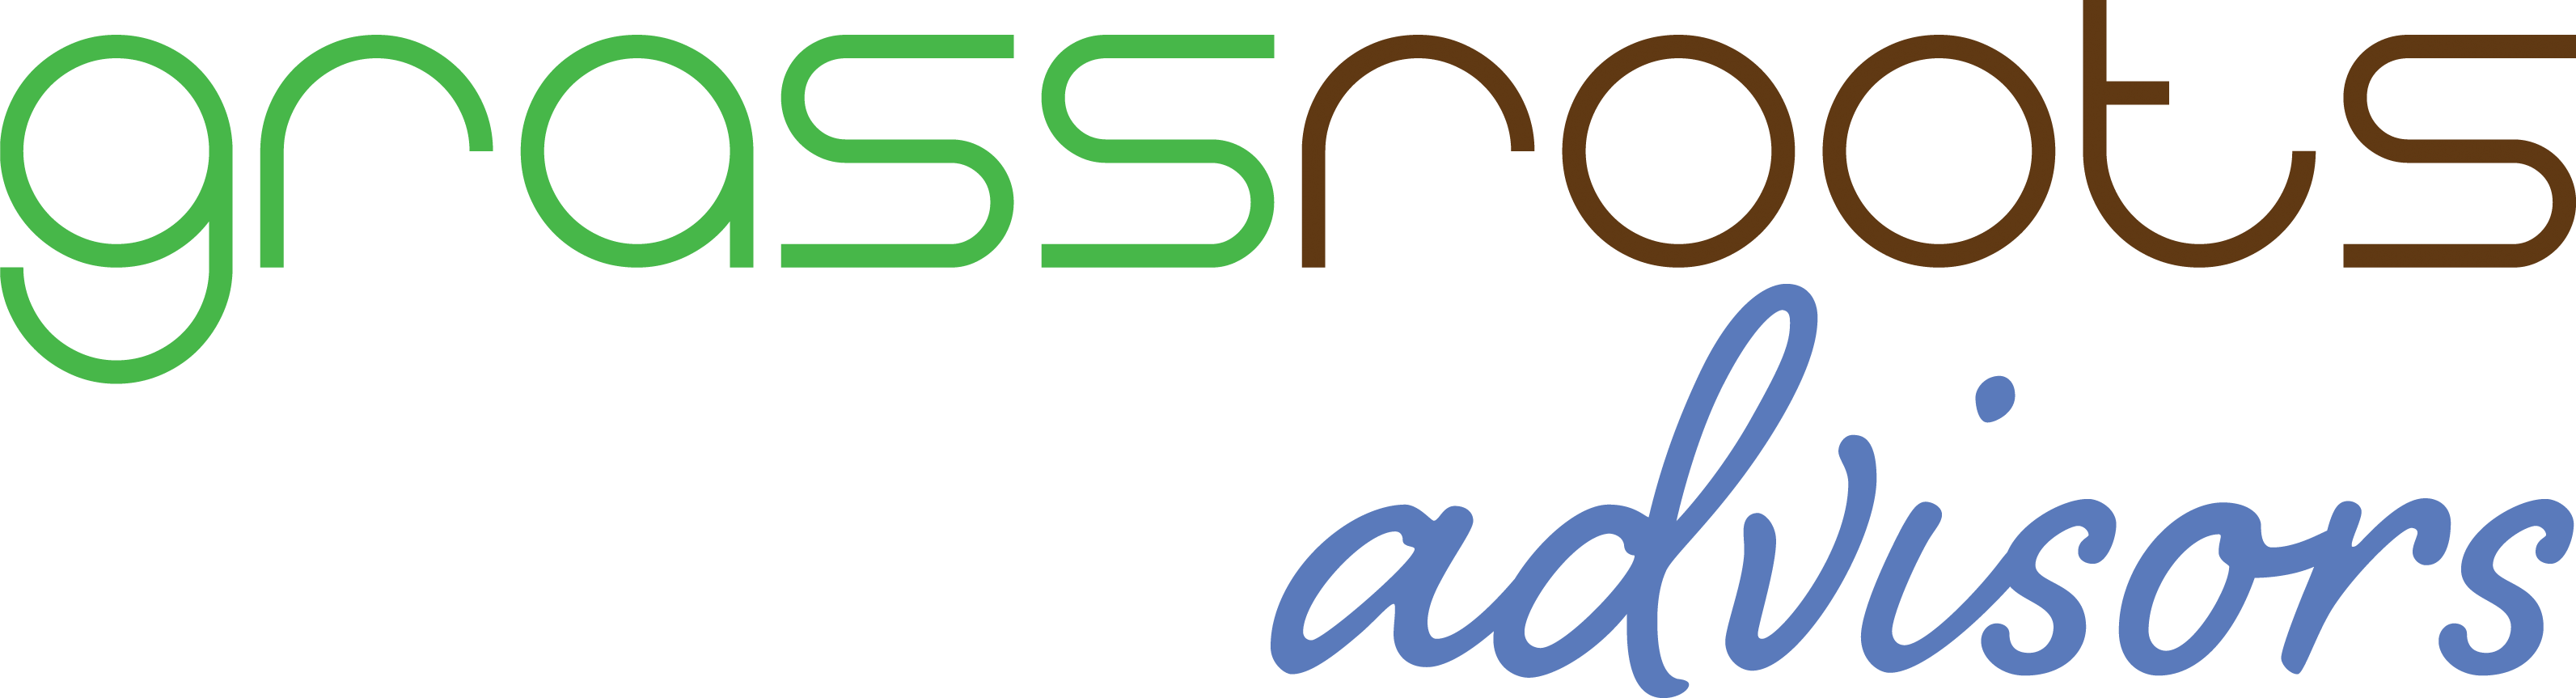 Grassroots Advisor logo nov 2021